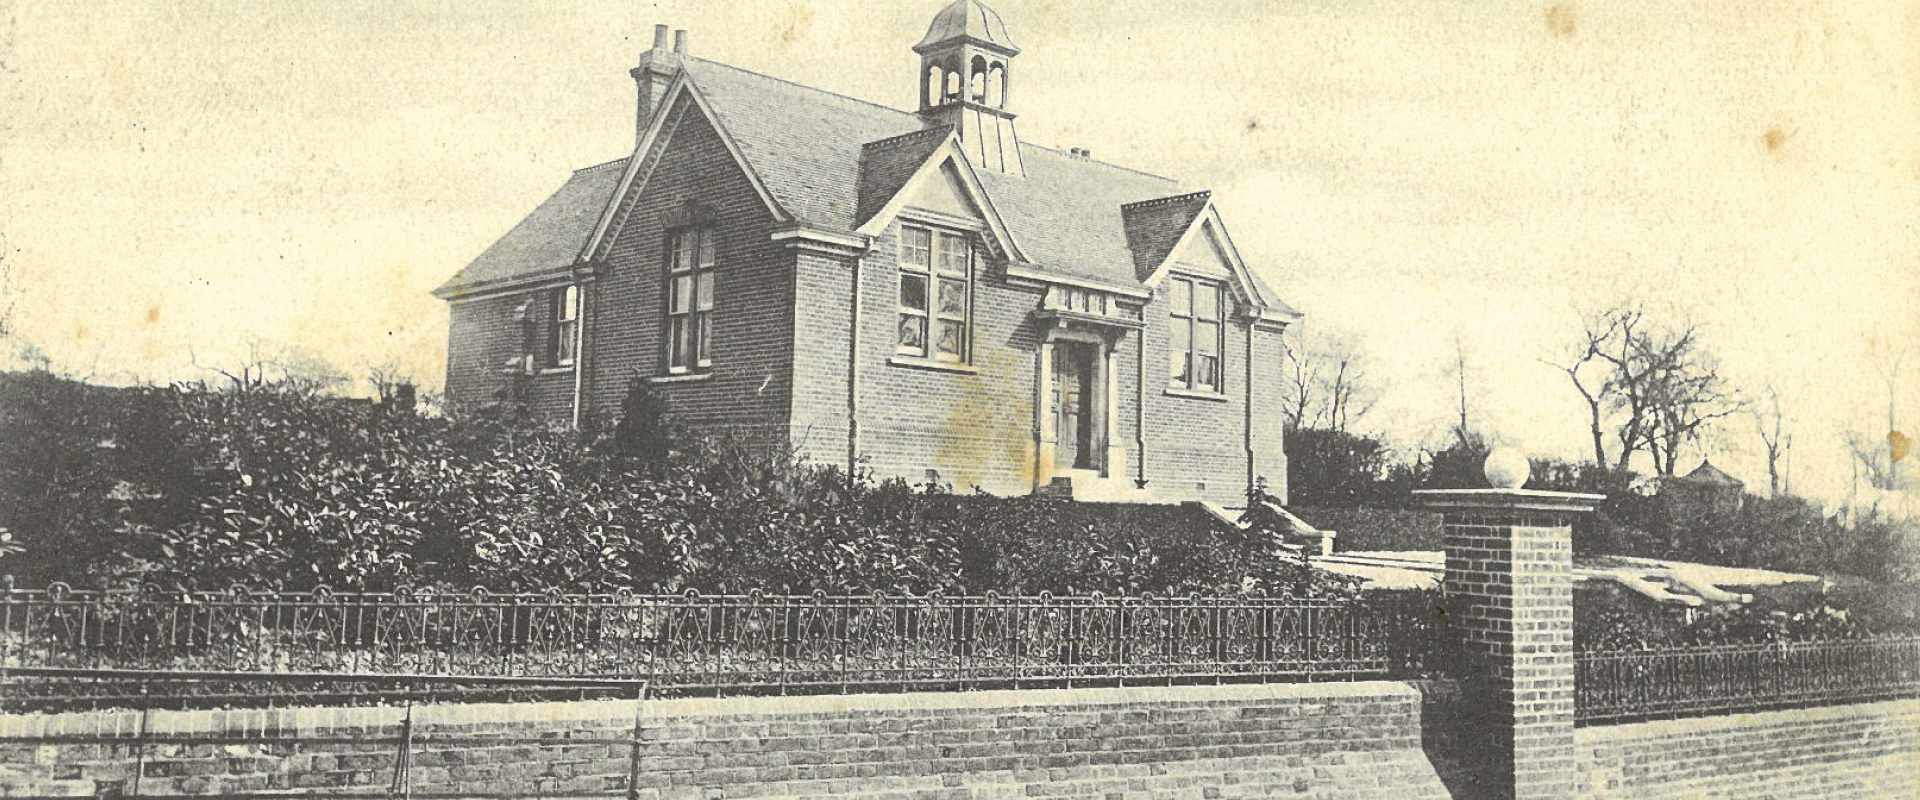 Thomas Mills High School History in 1902